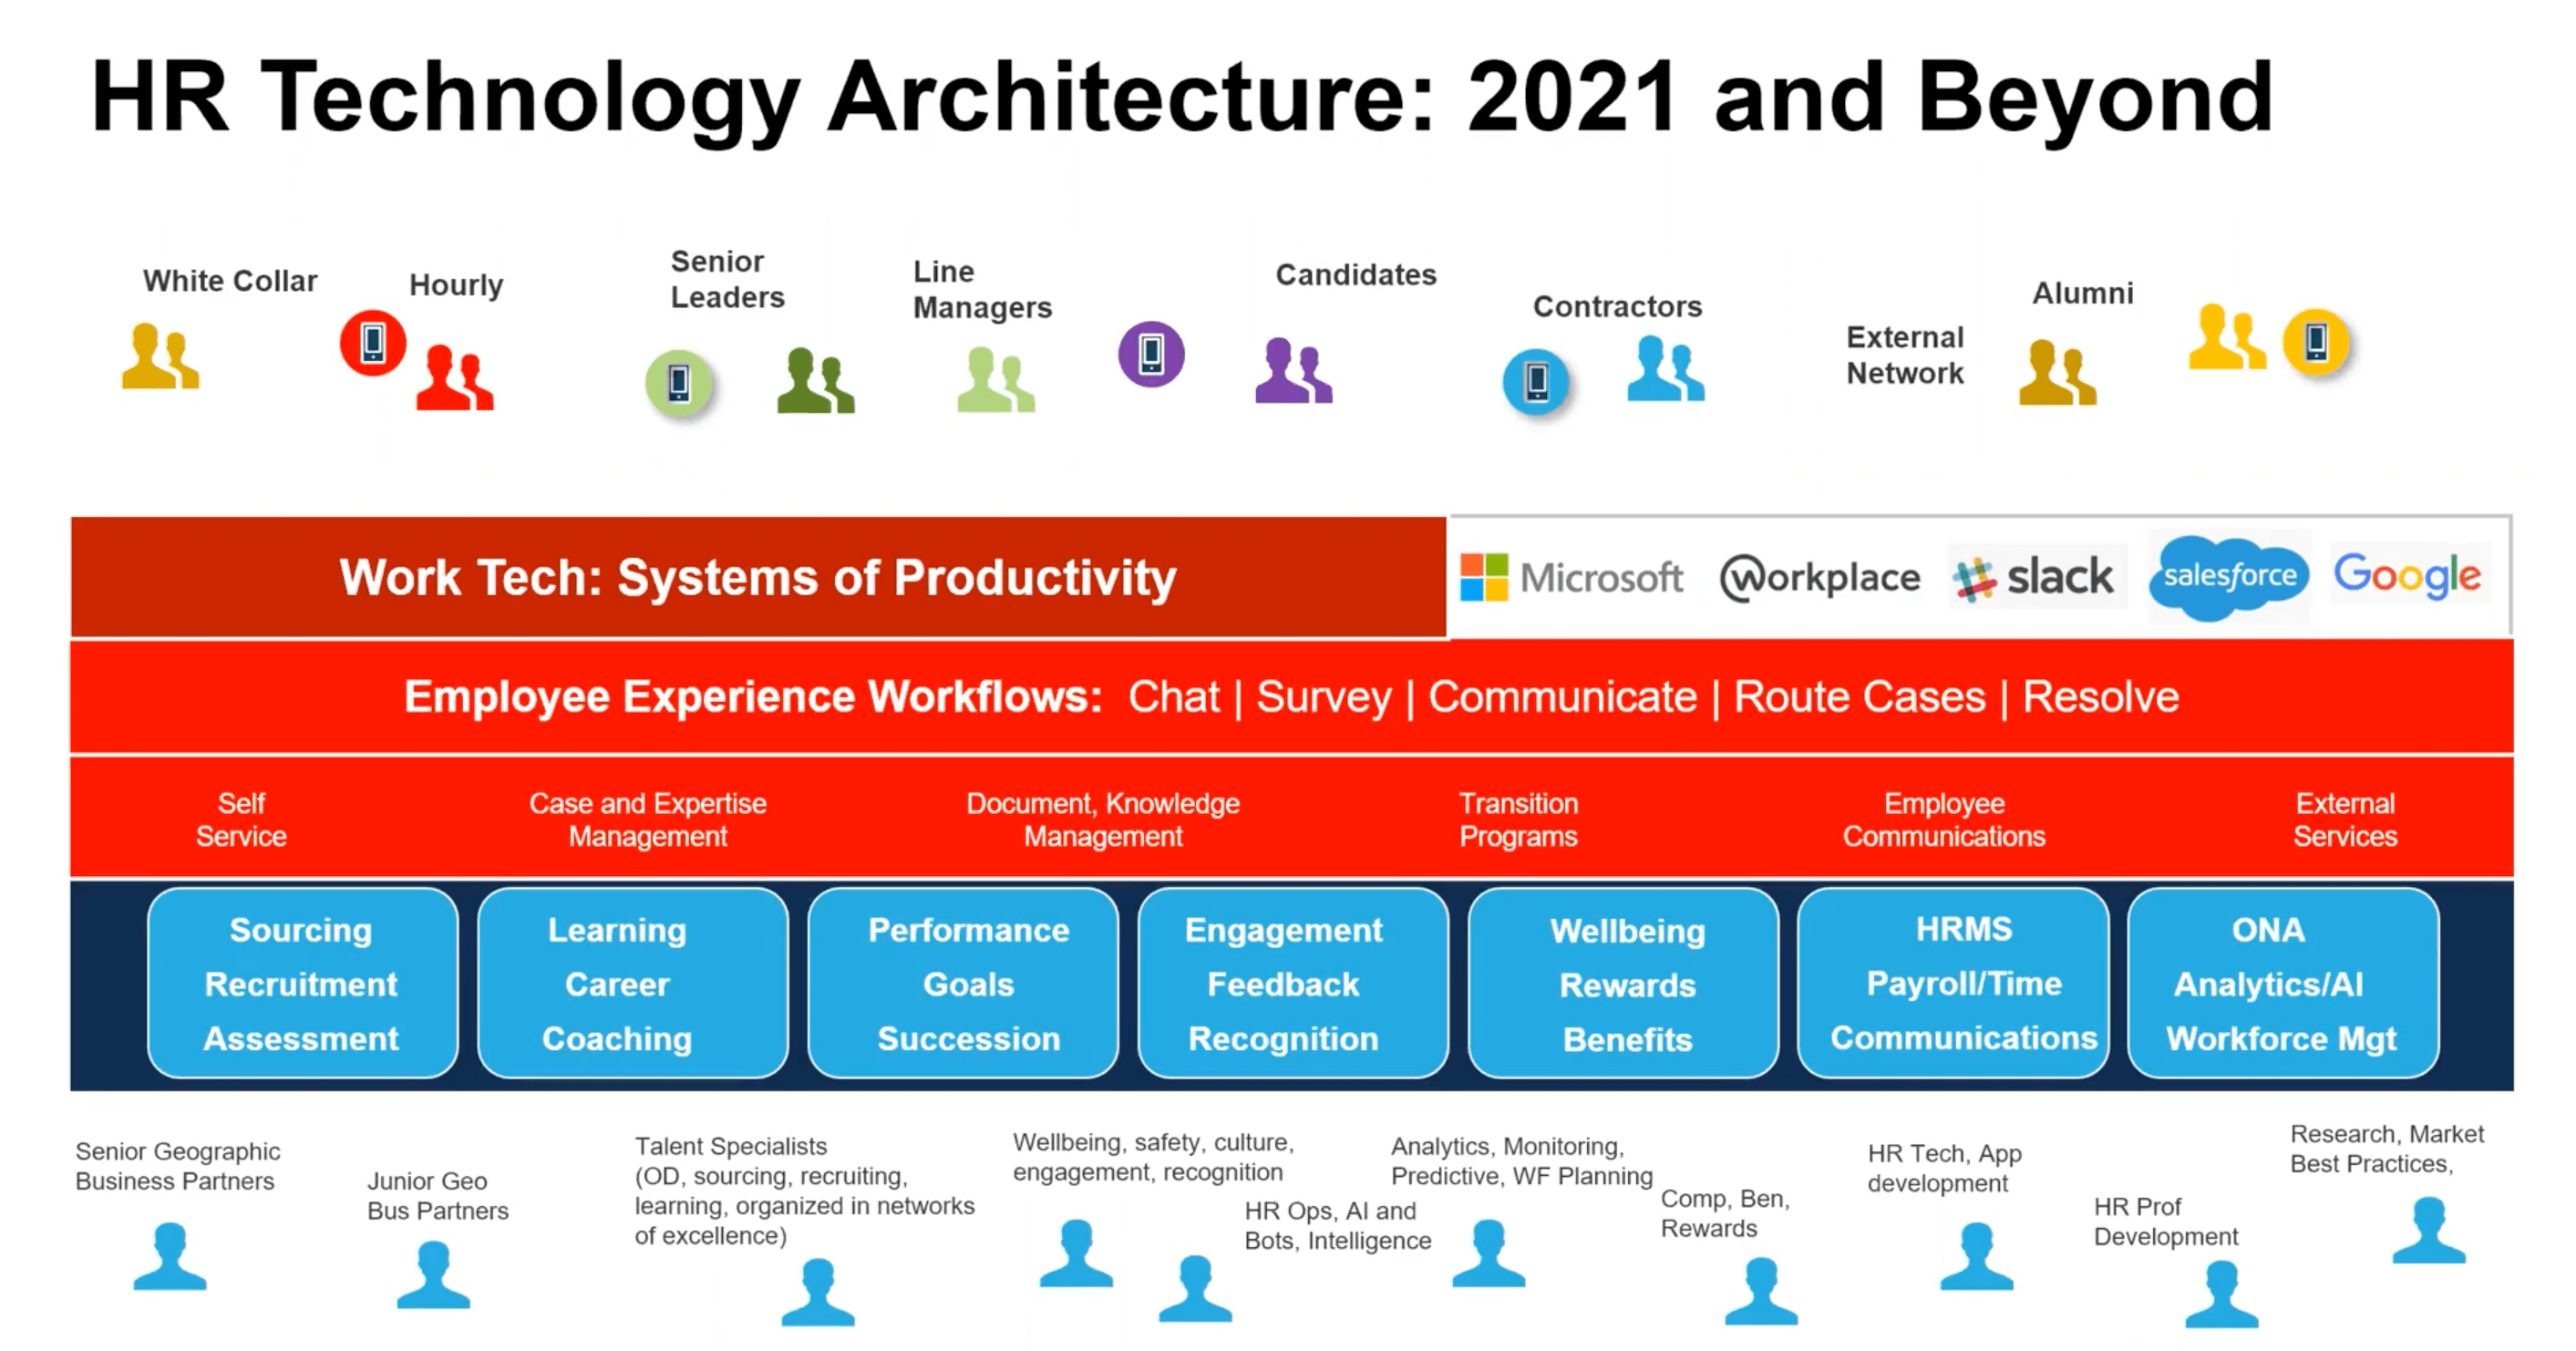 Josh Bersin - HR technology architecture